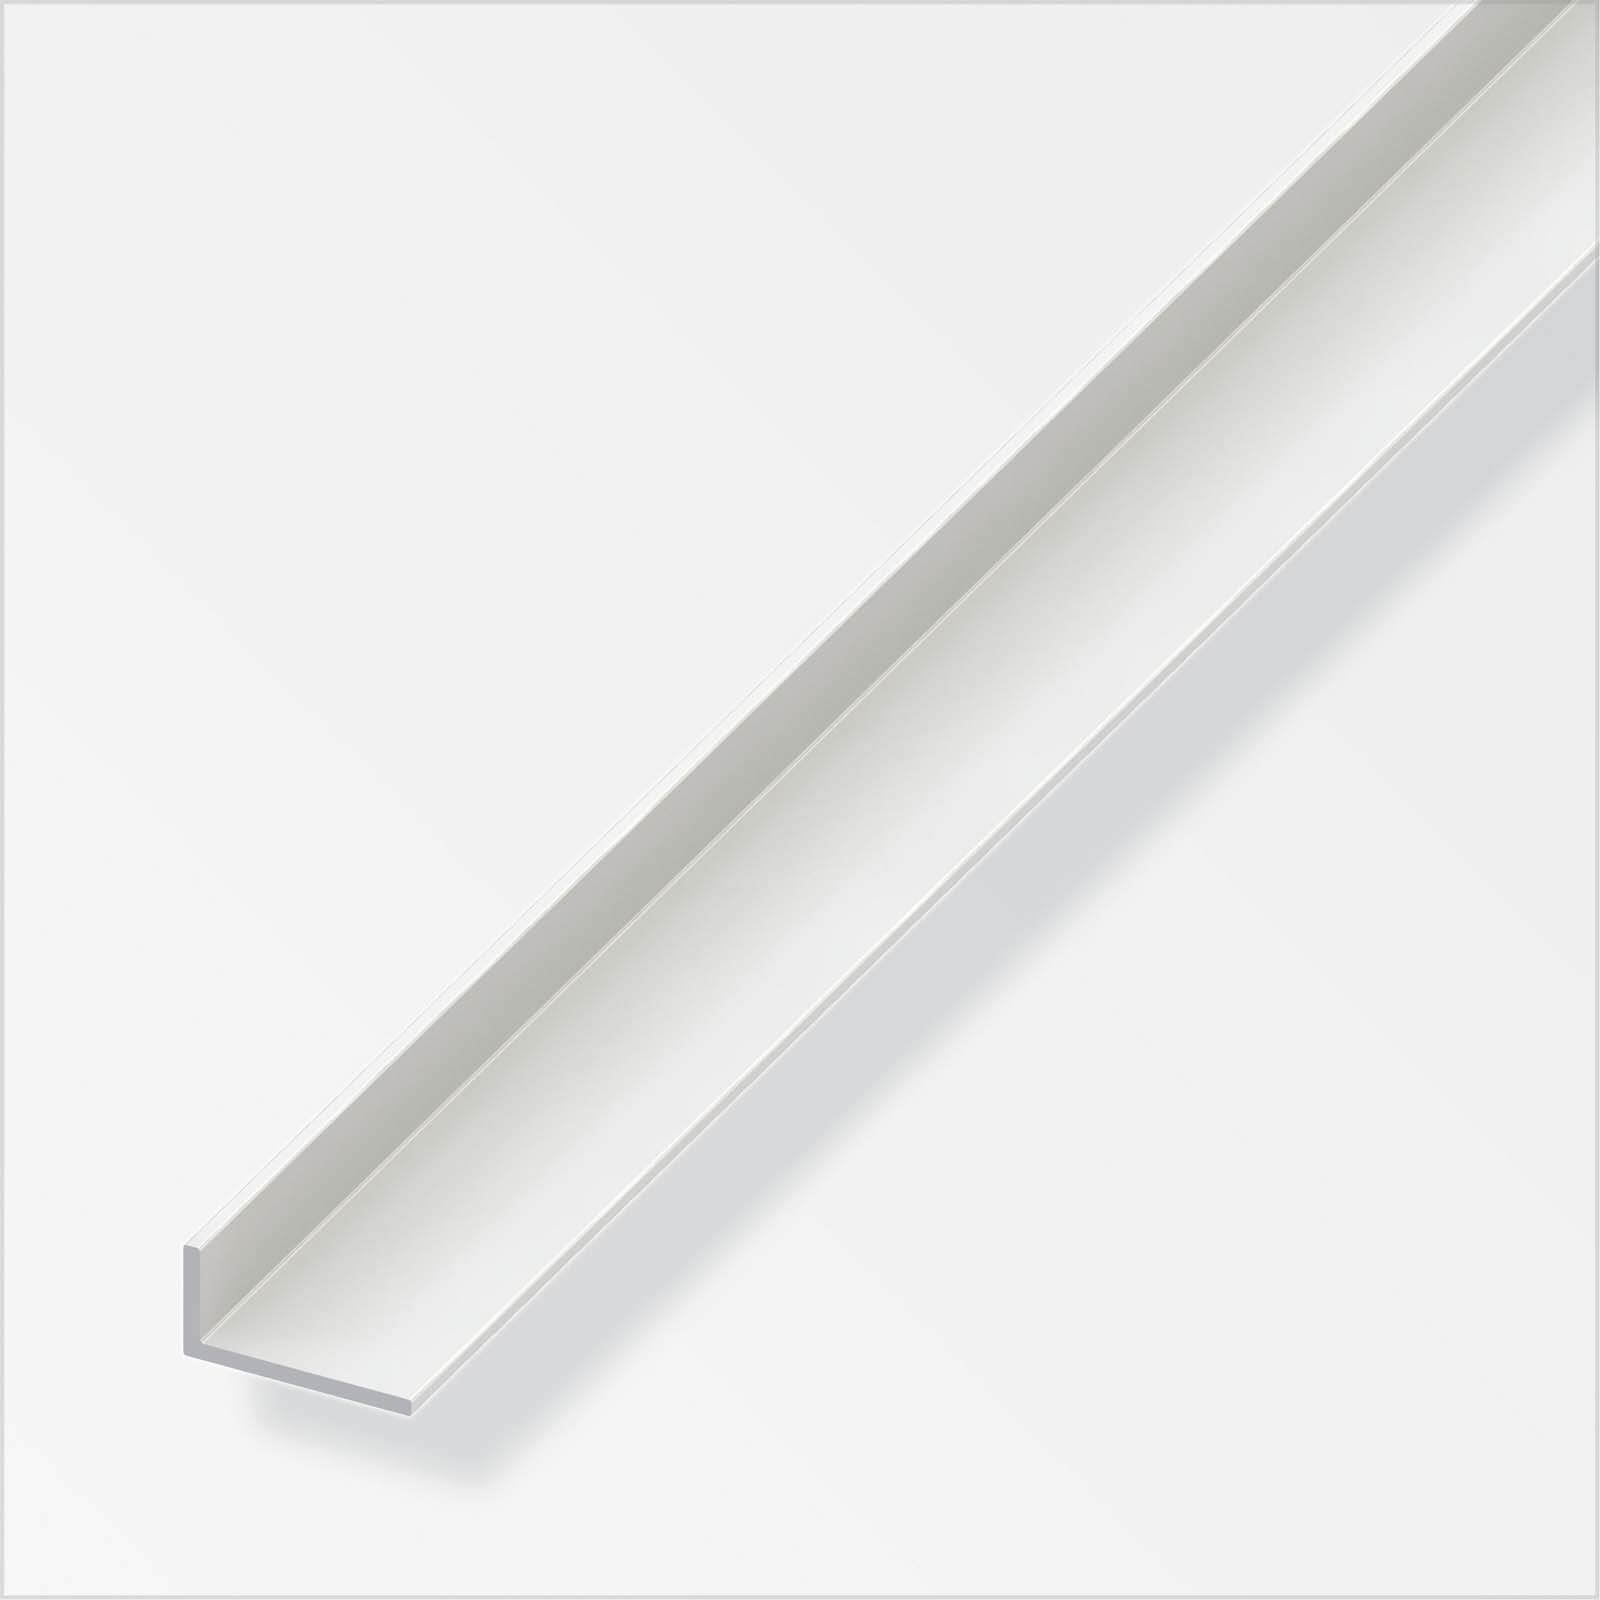 PVC Unequal Angle Profile - 1m x 25 x 20mm